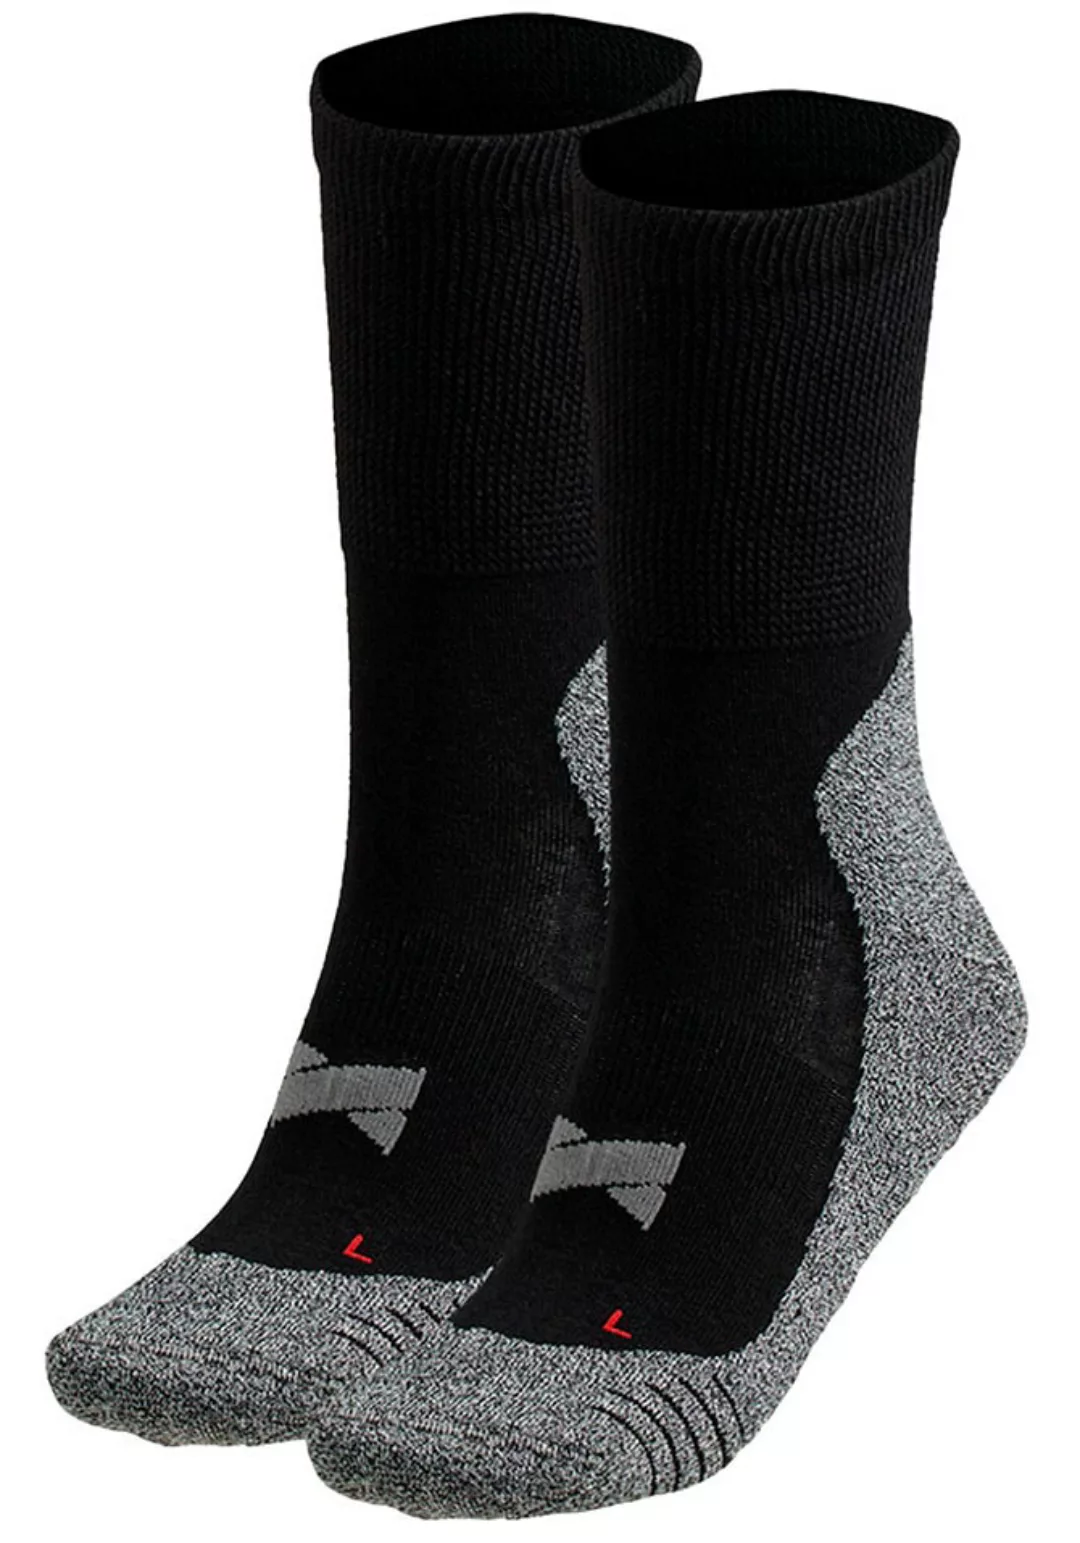 XTREME sockswear Langsocken günstig online kaufen